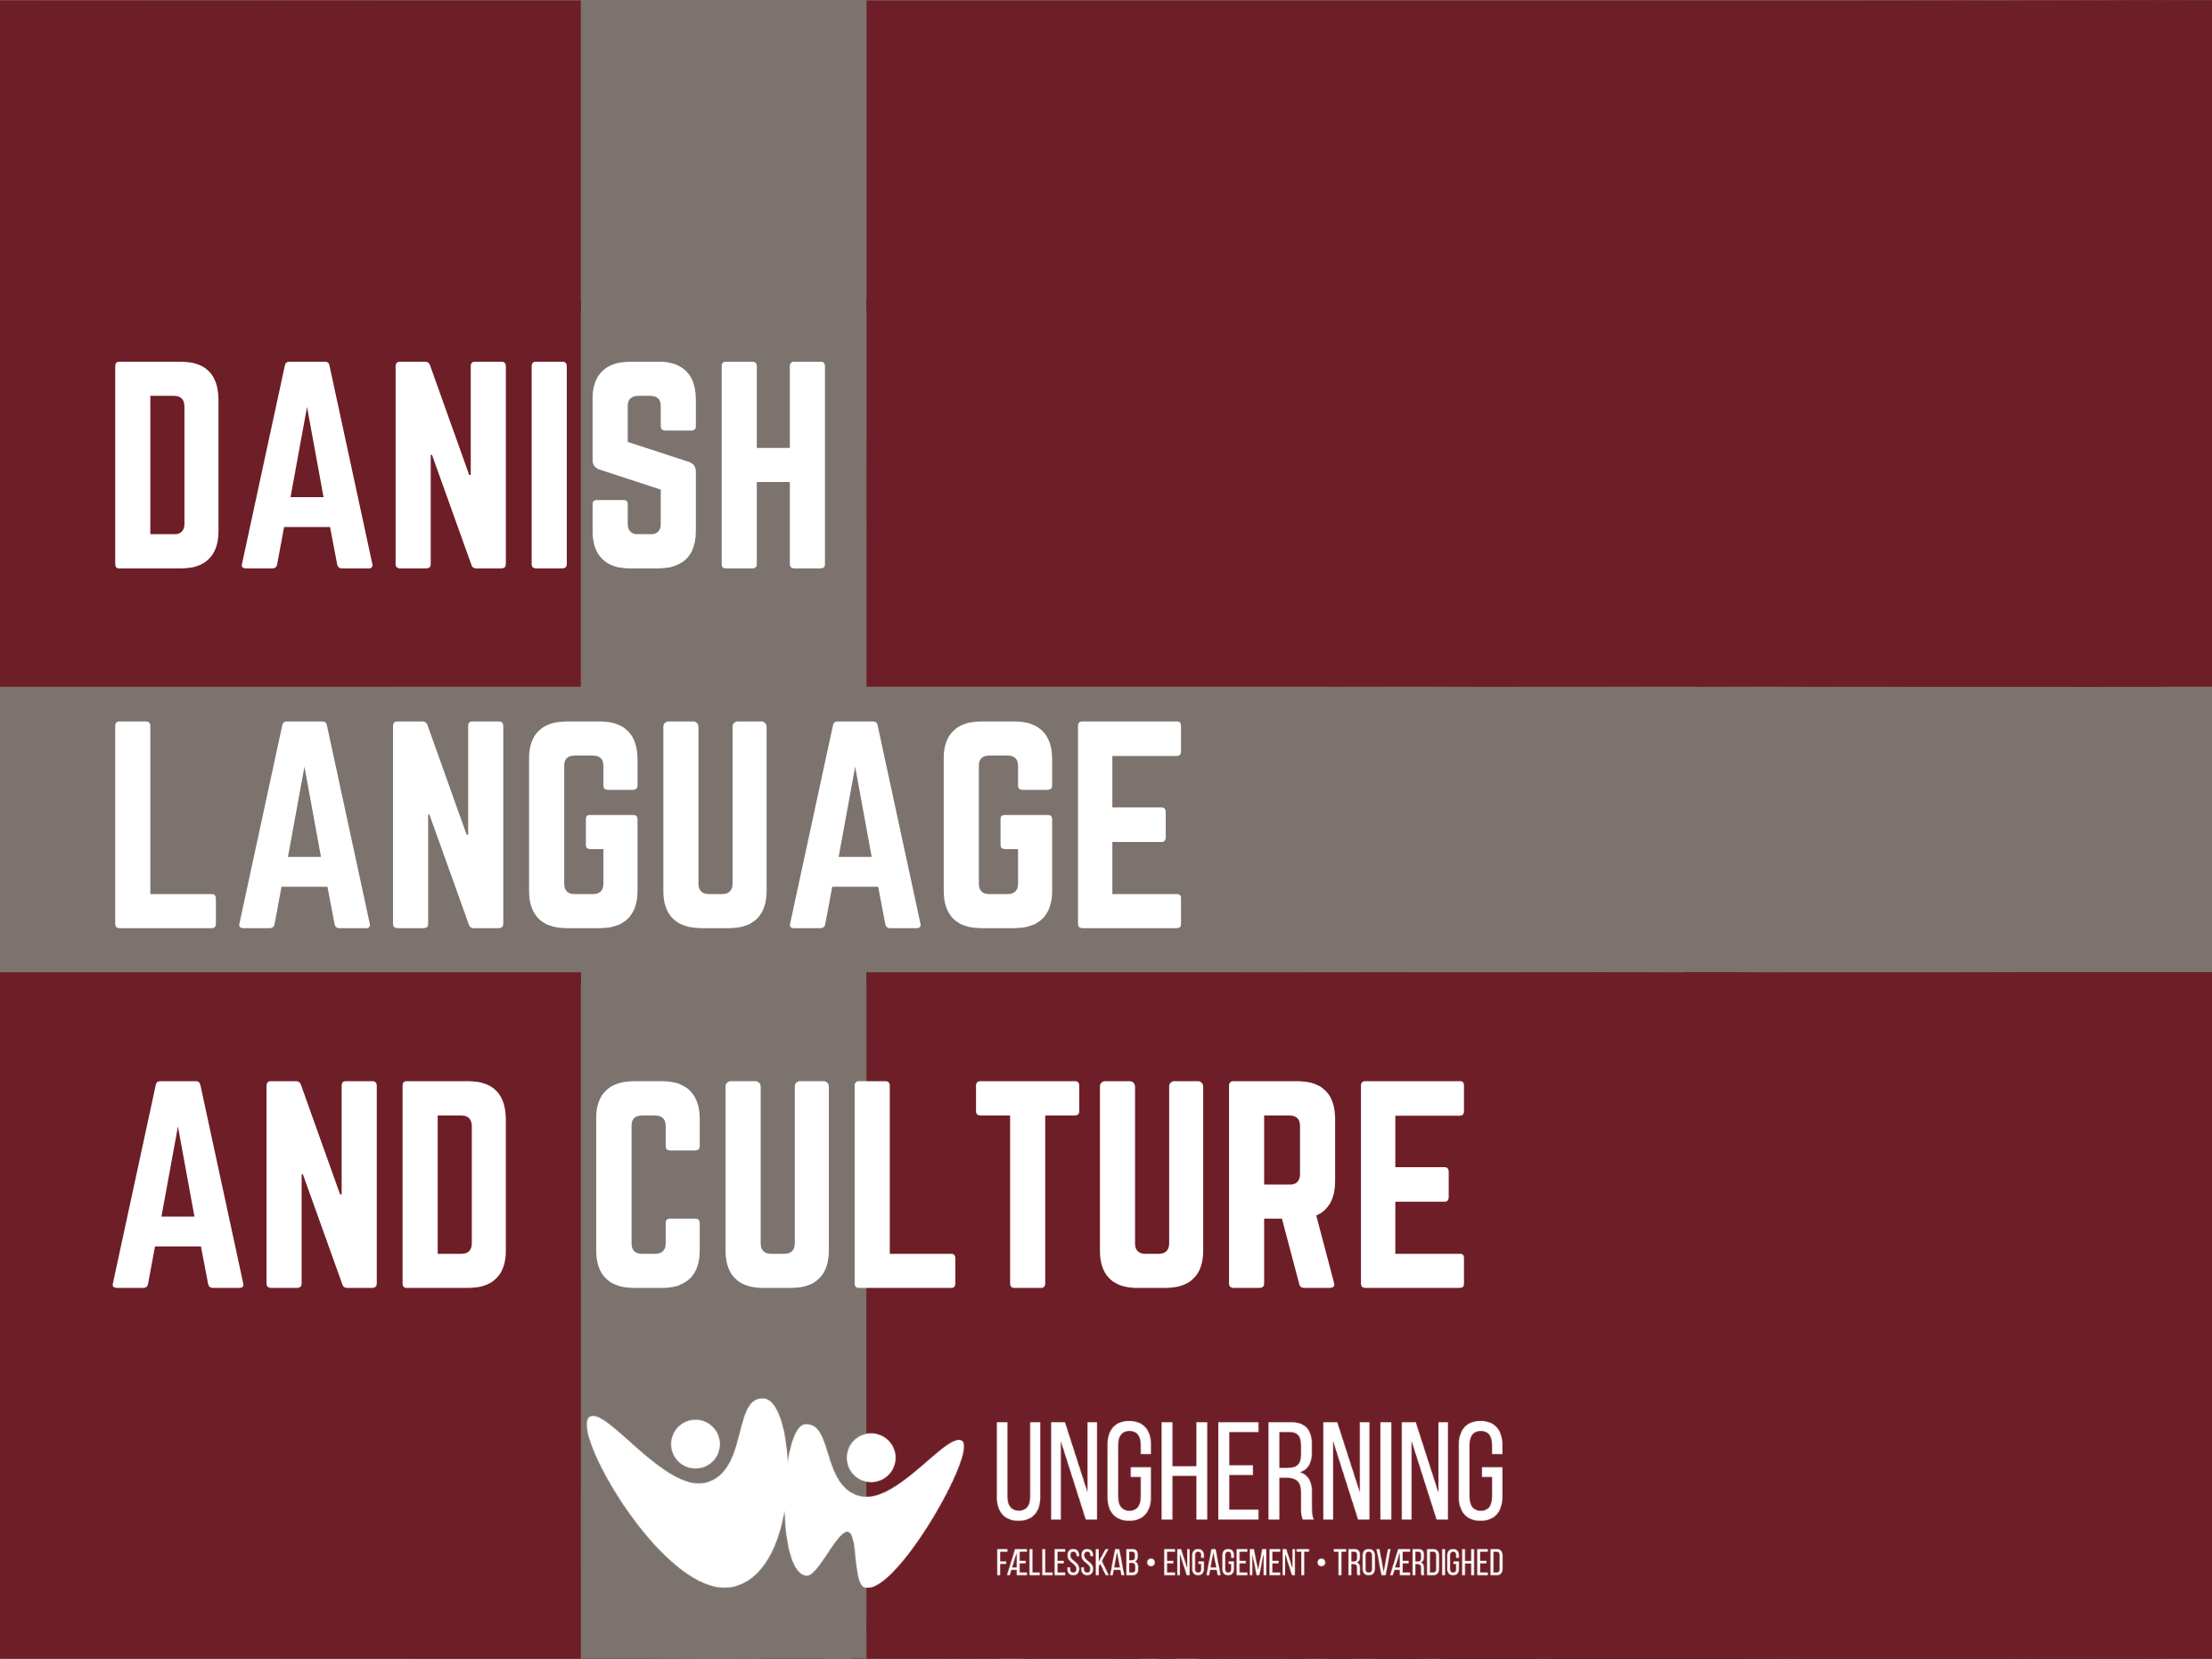 &Danish_Language_and_Culture